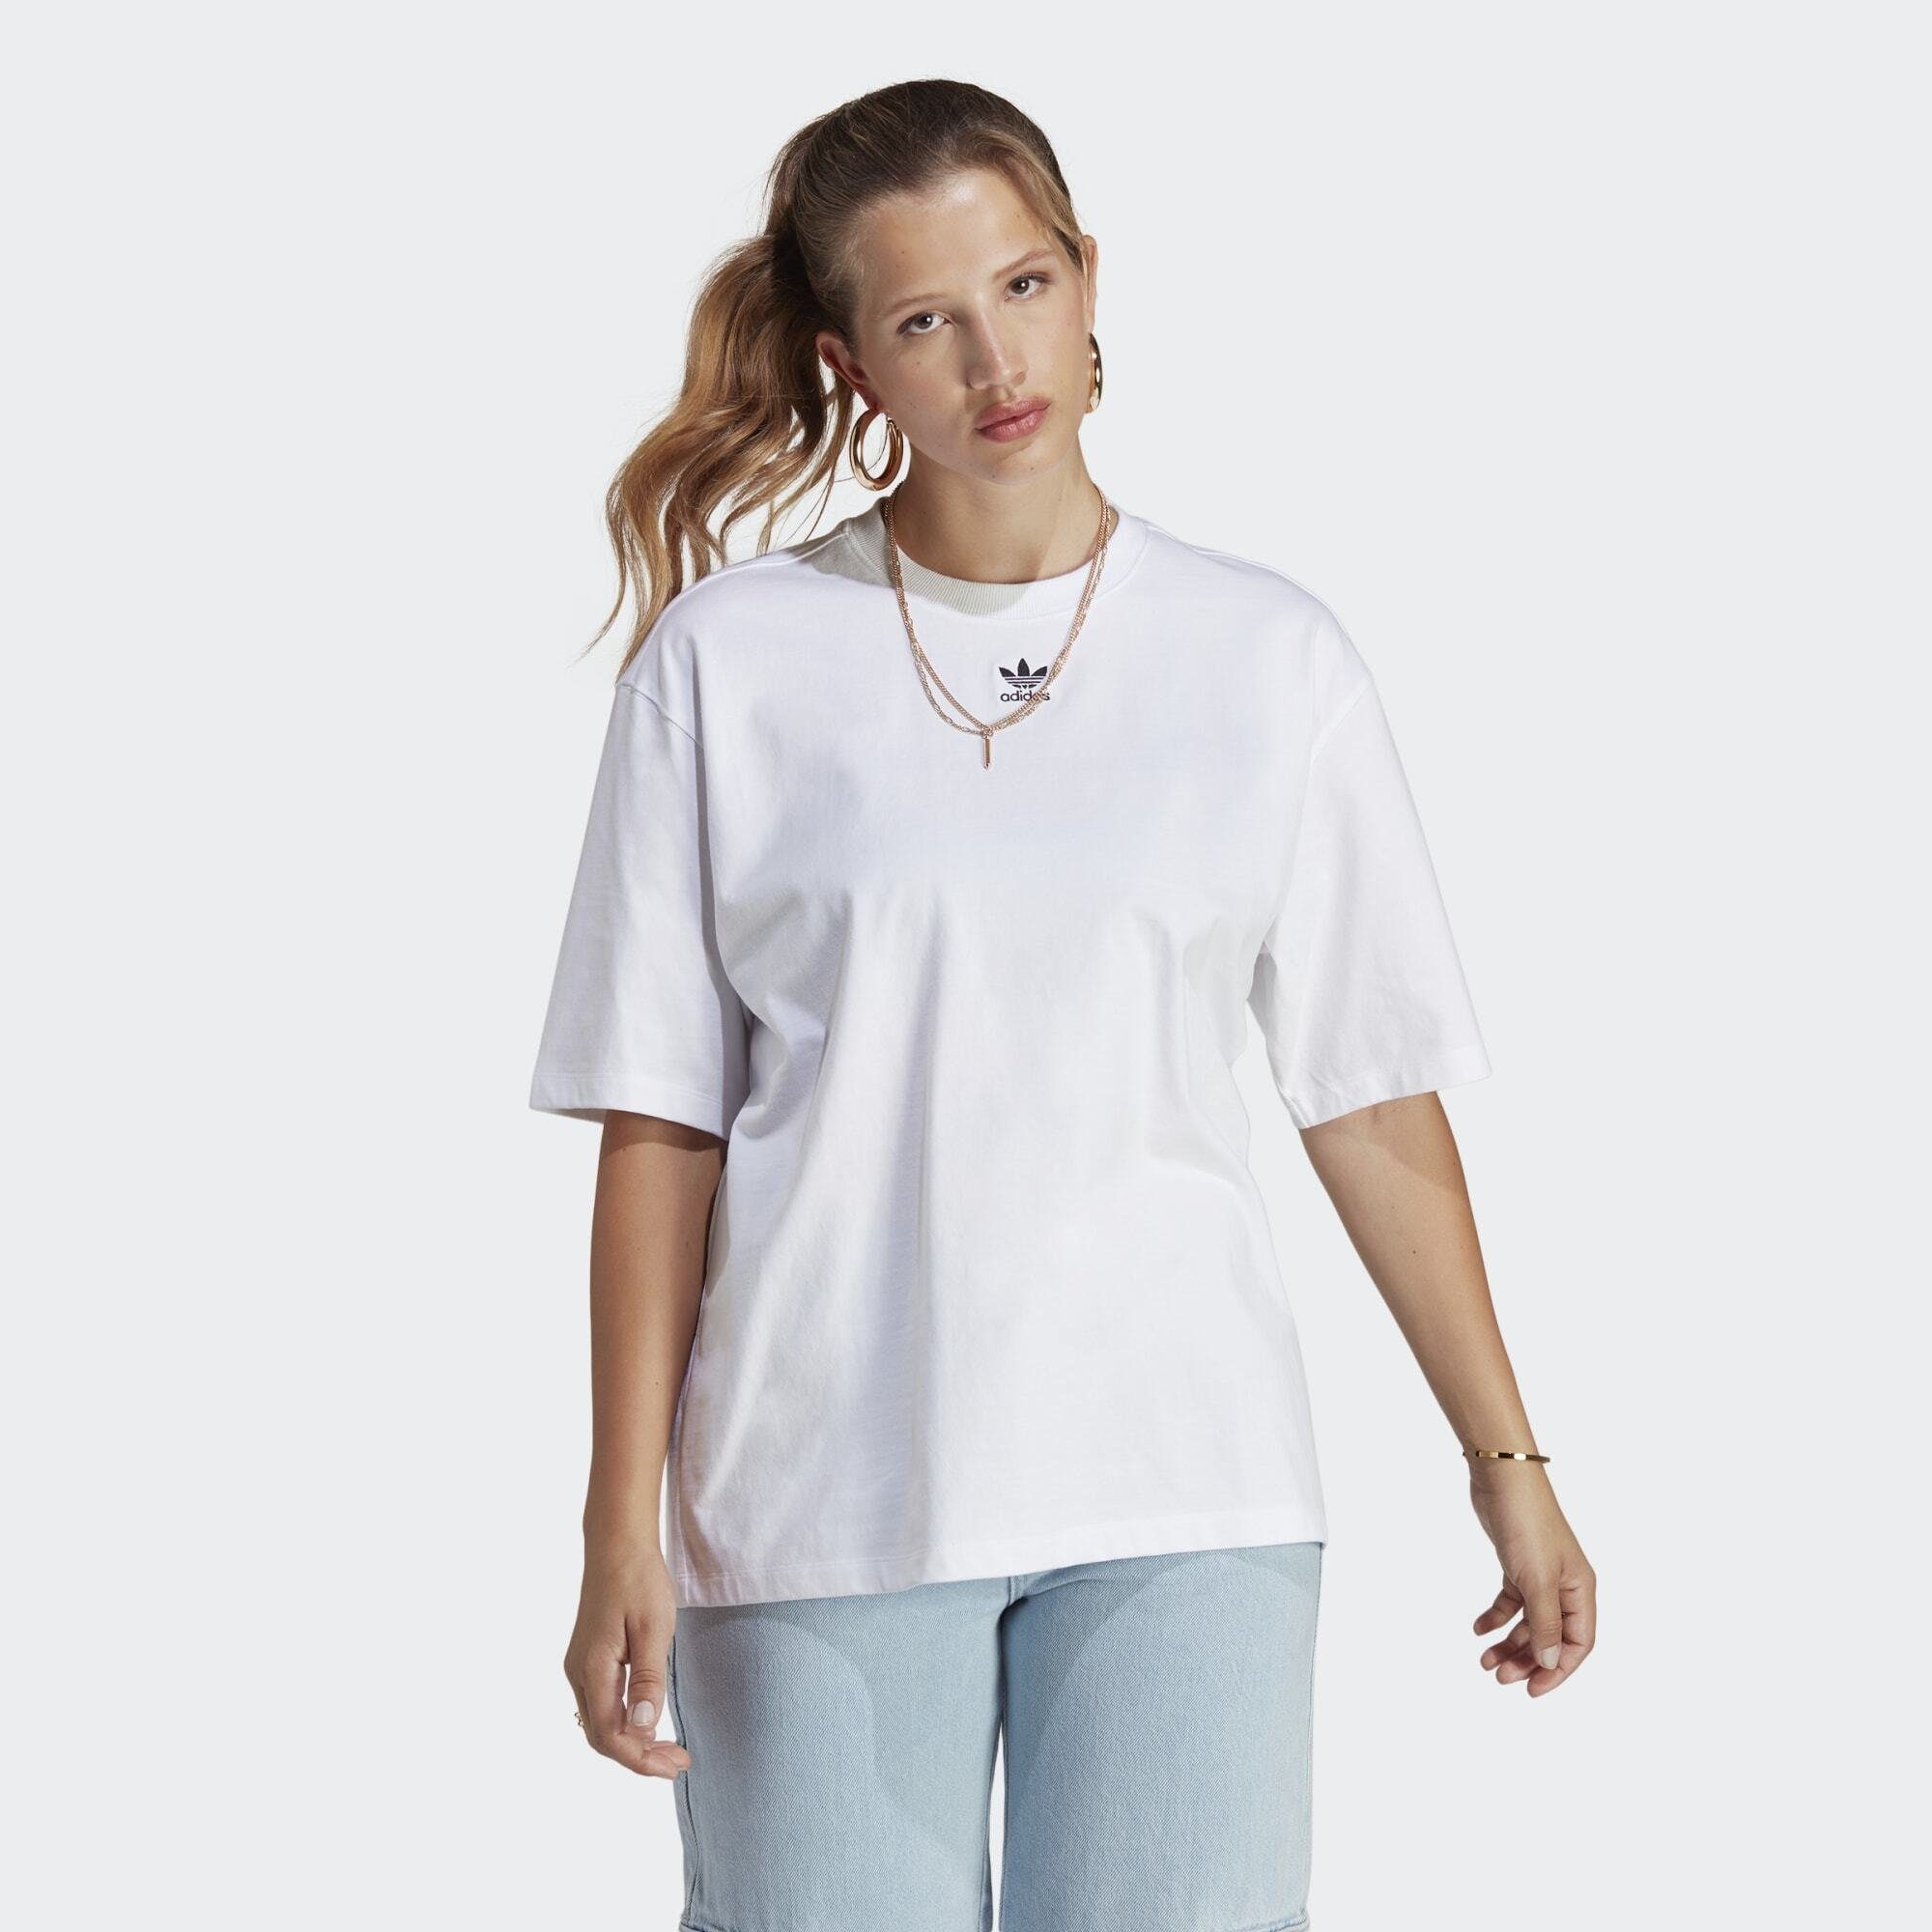 ESSENTIALS Originals T-Shirt White ADICOLOR adidas T-SHIRT